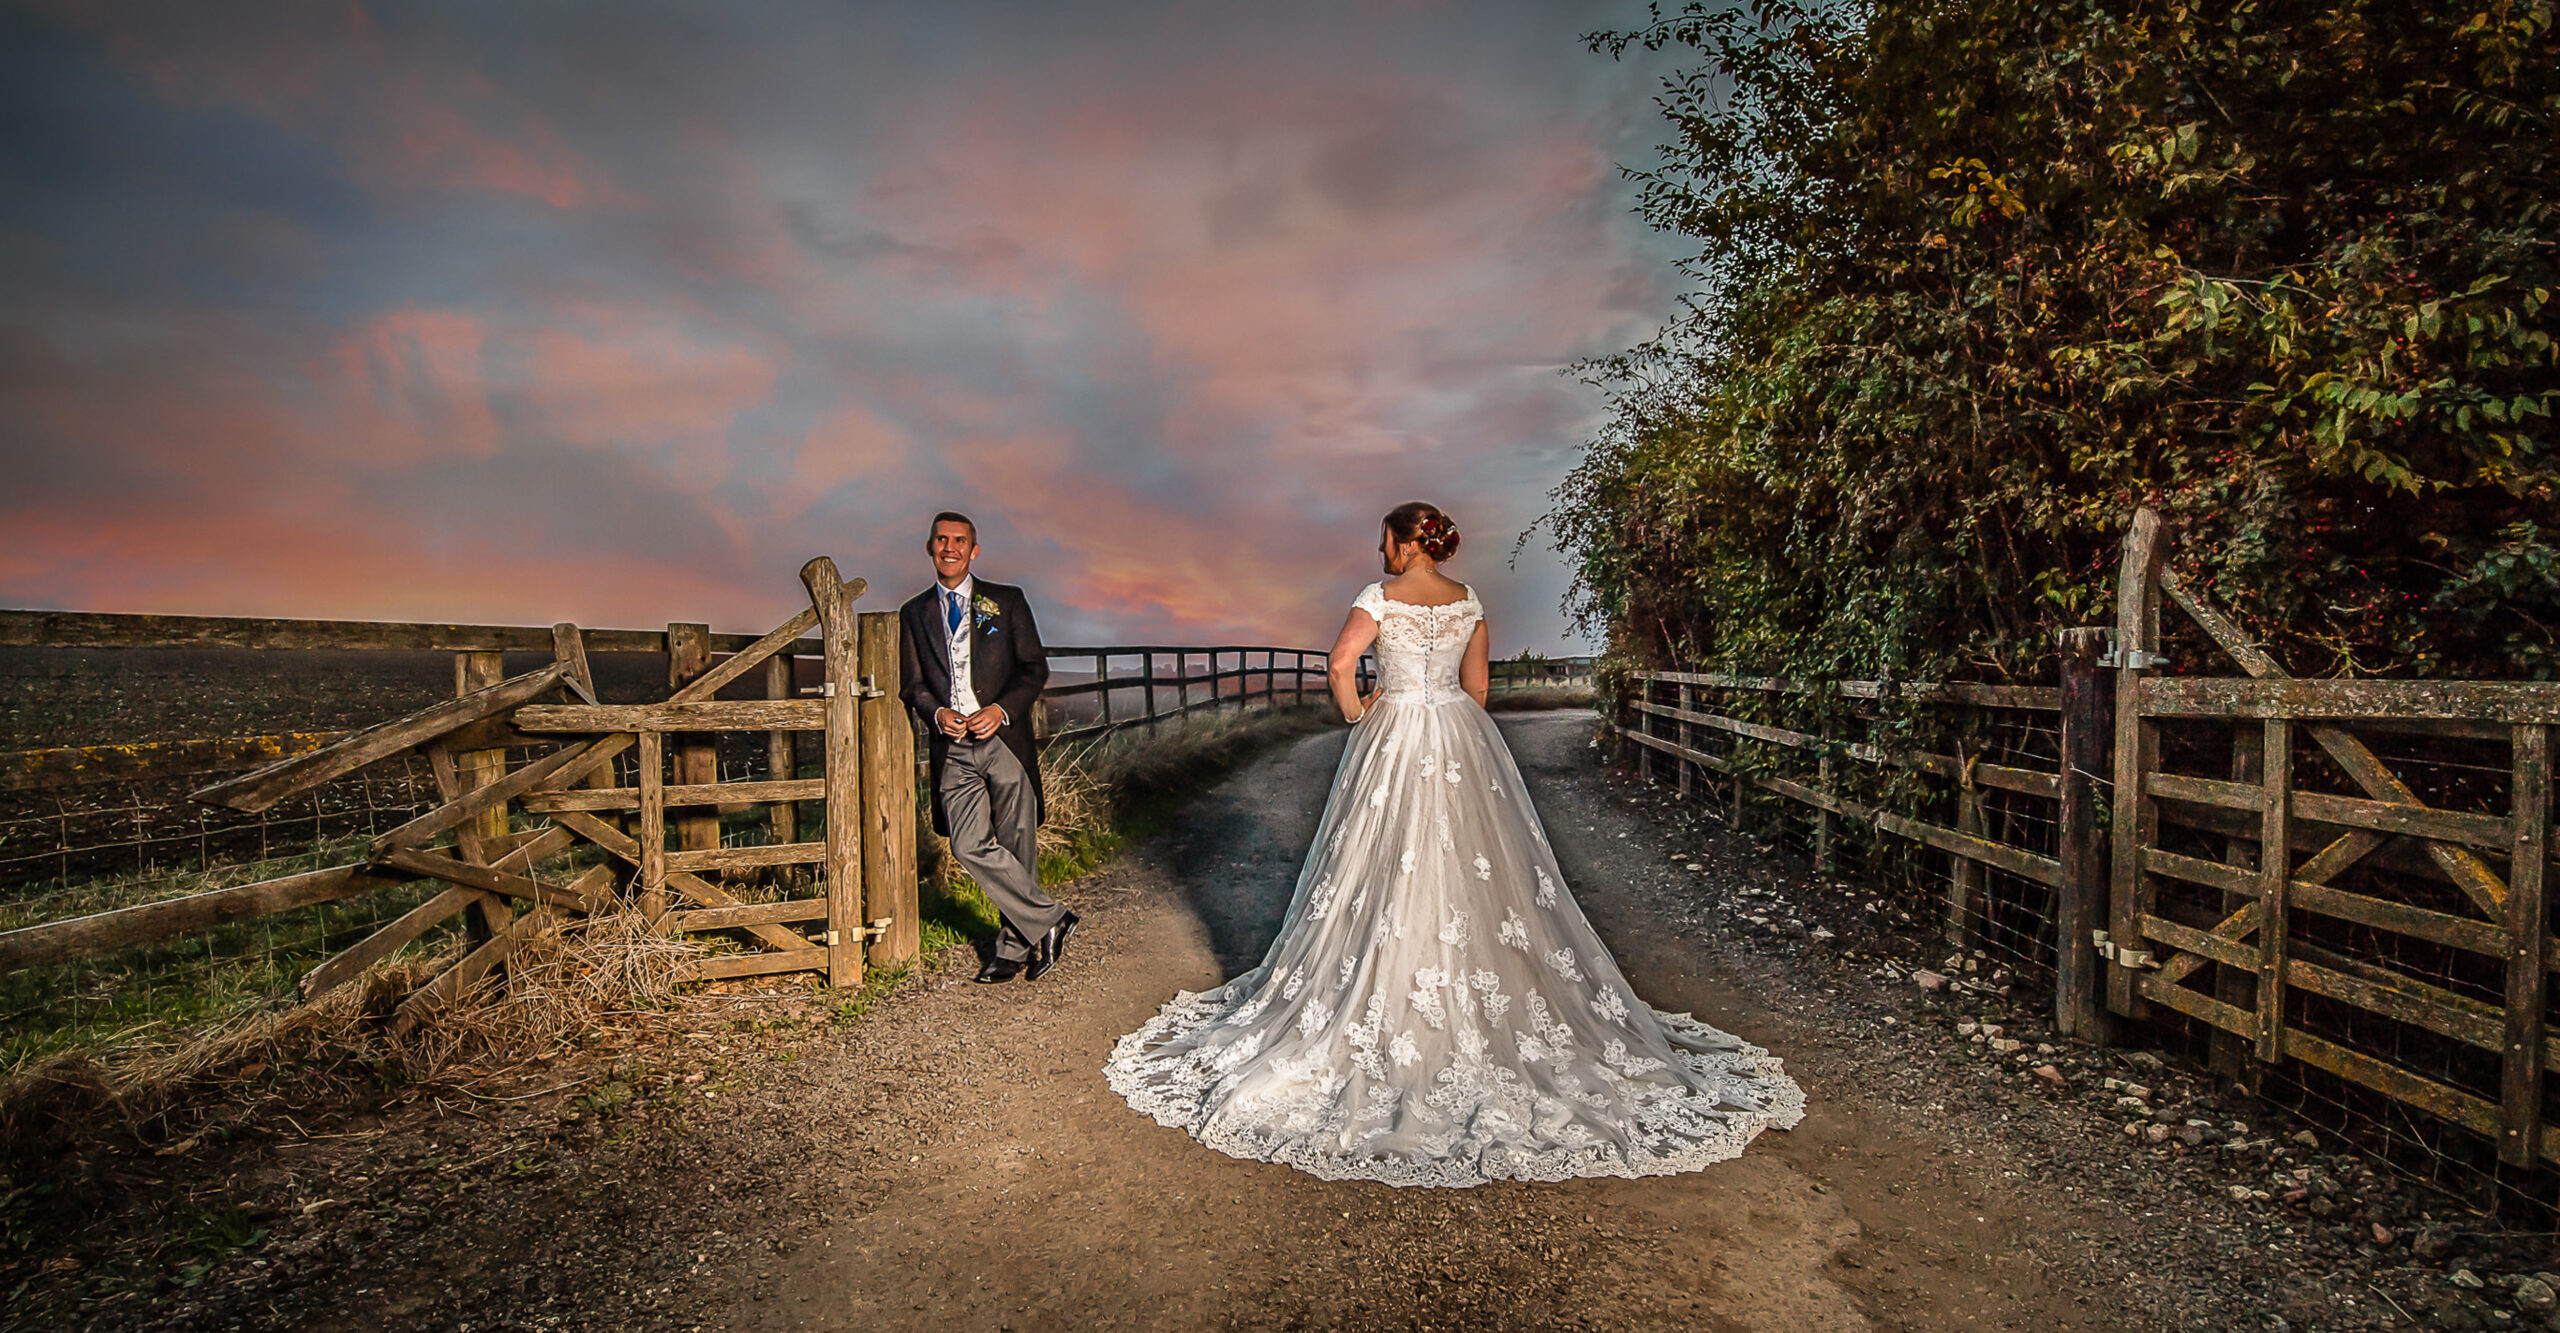 Notley Tythe Barn wedding photography